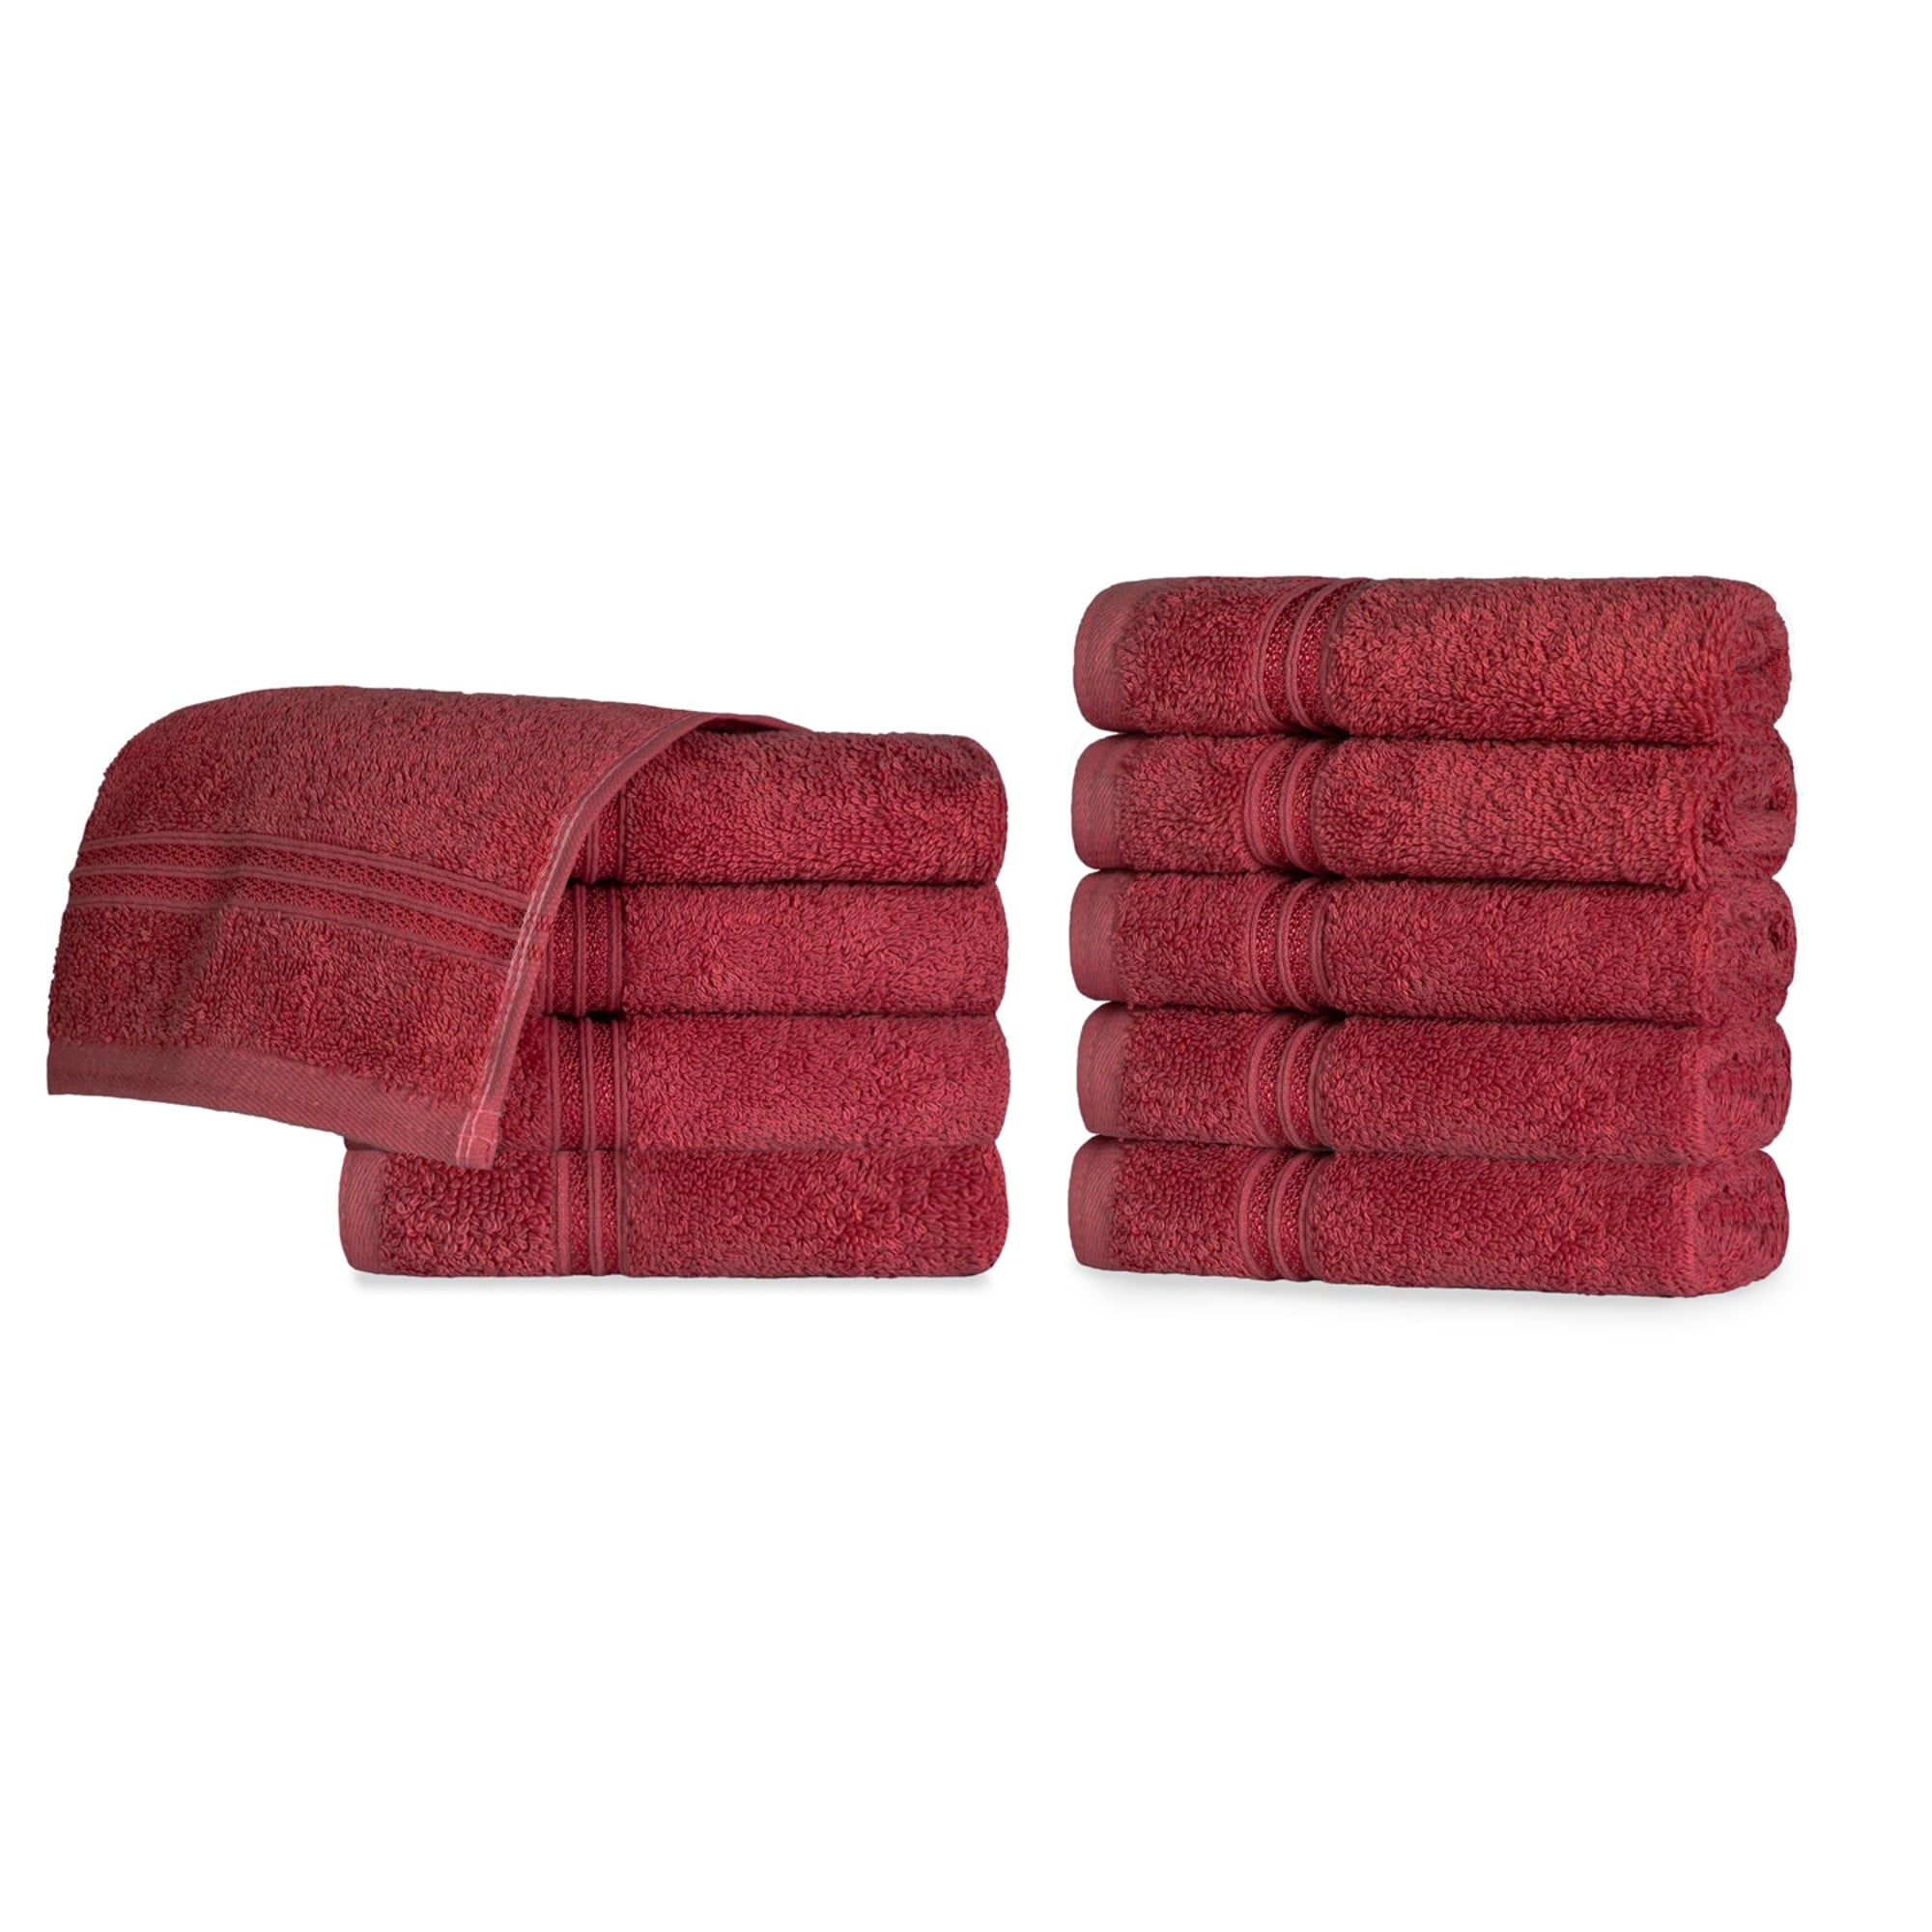 90 x 160 cm 8 Colours 5 x 100% Egyptian Cotton Soft Bath Towels in Size 